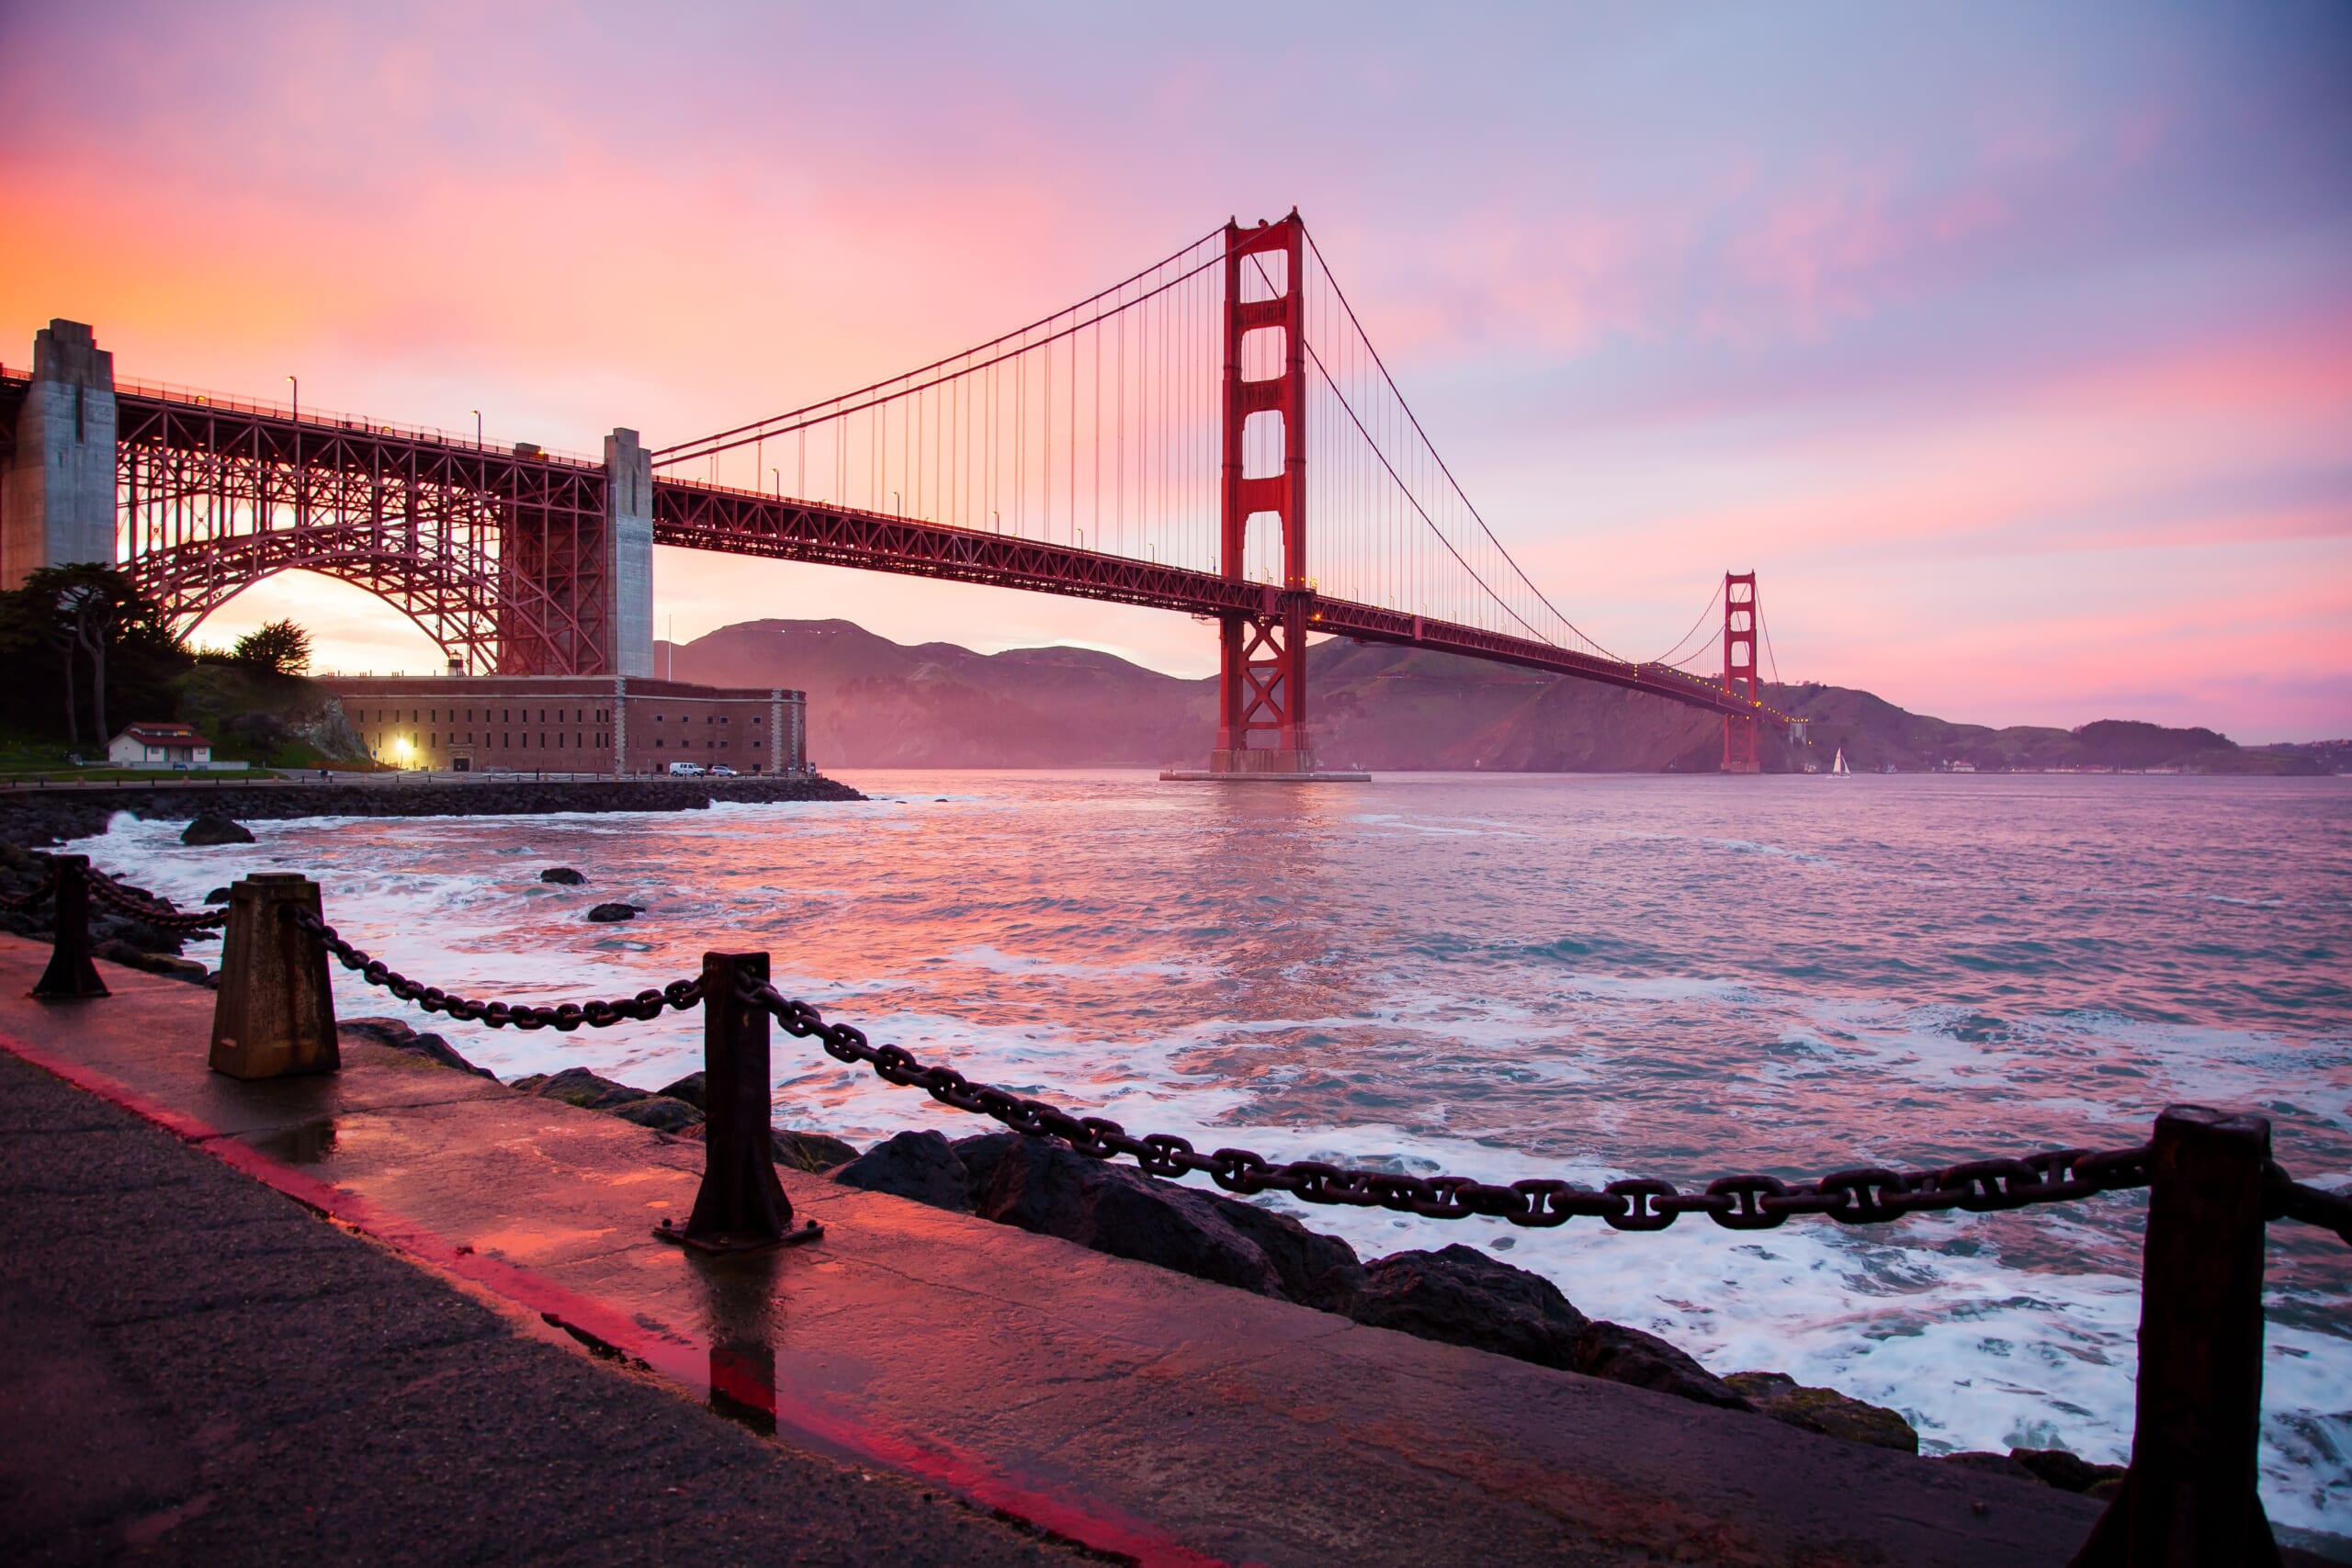 San Francisco Image by Pexels